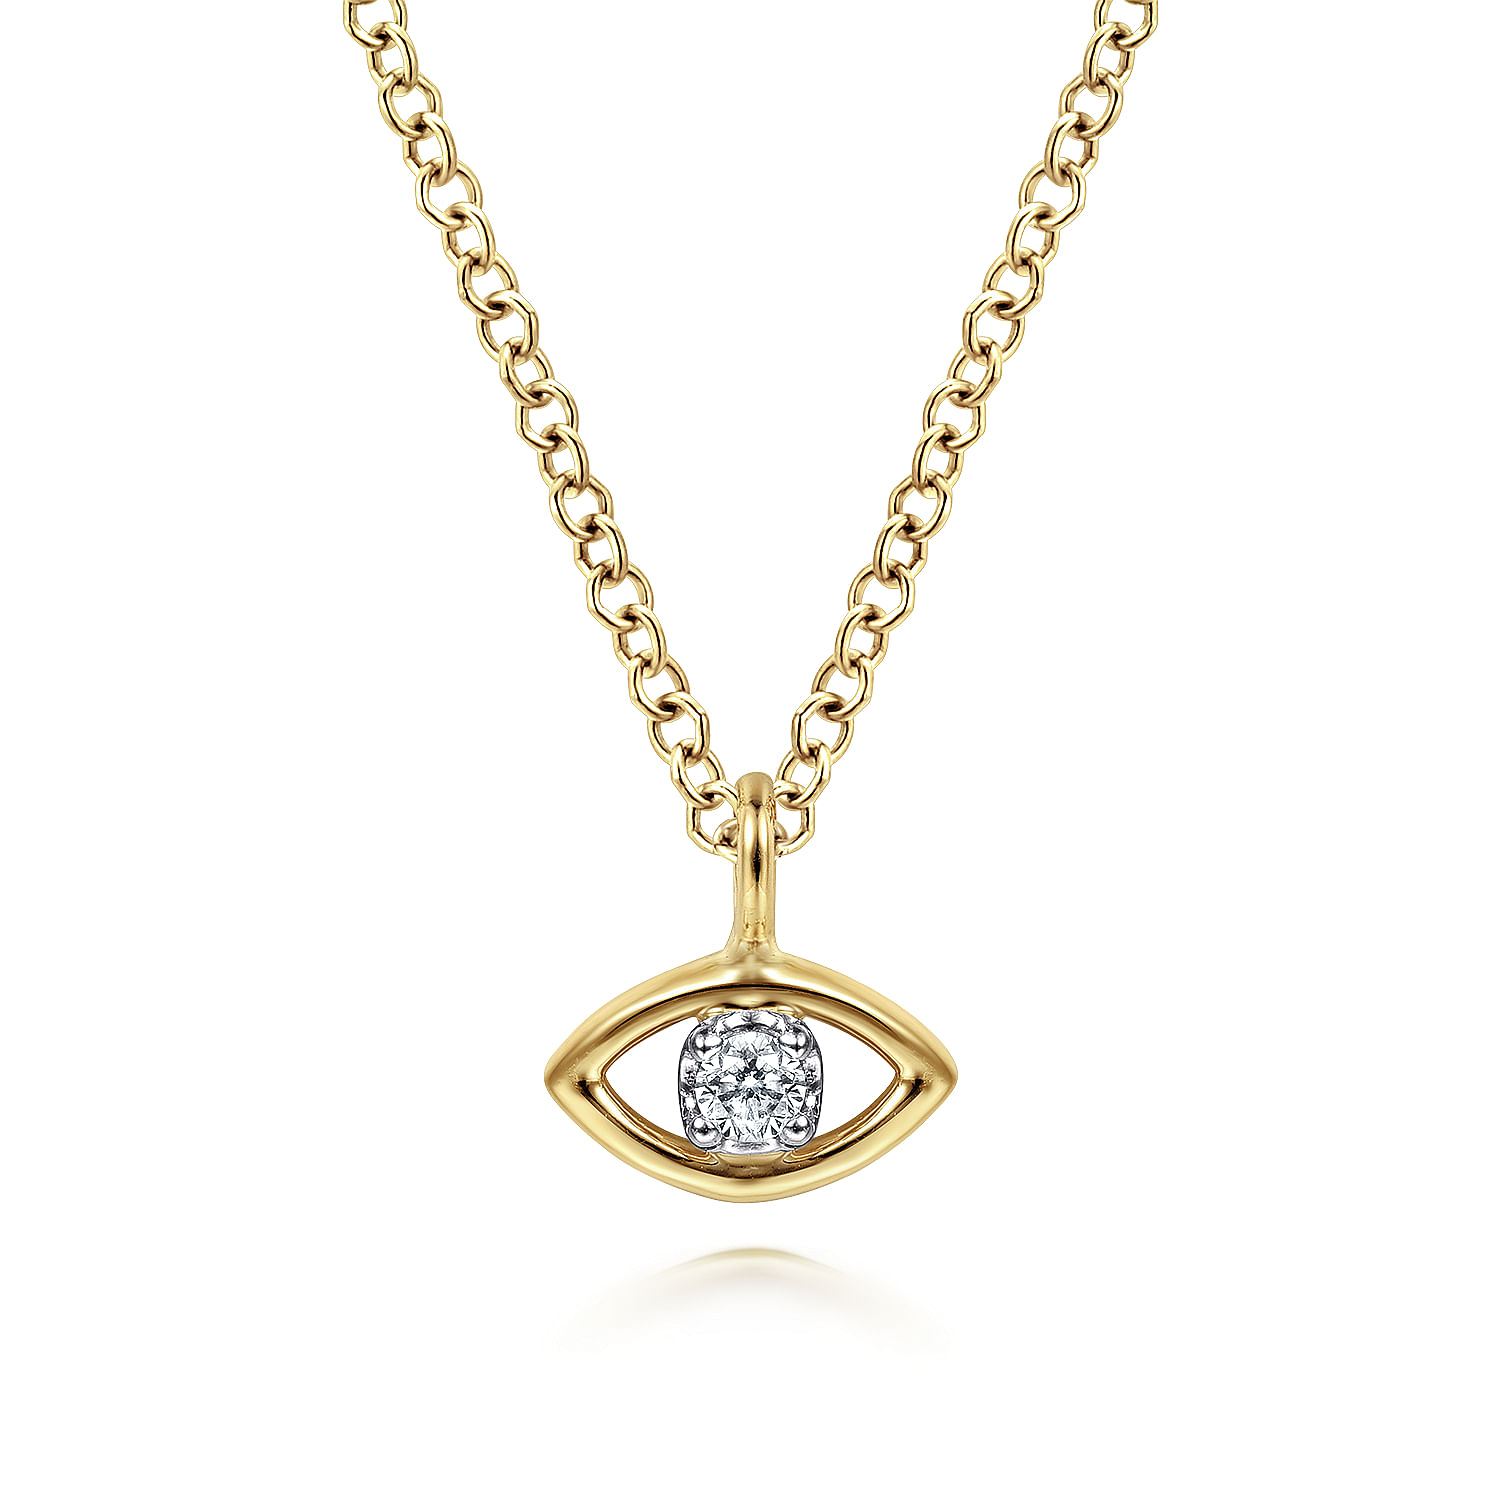 14K Yellow-White Gold Diamond Evil Eye Pendant Necklace